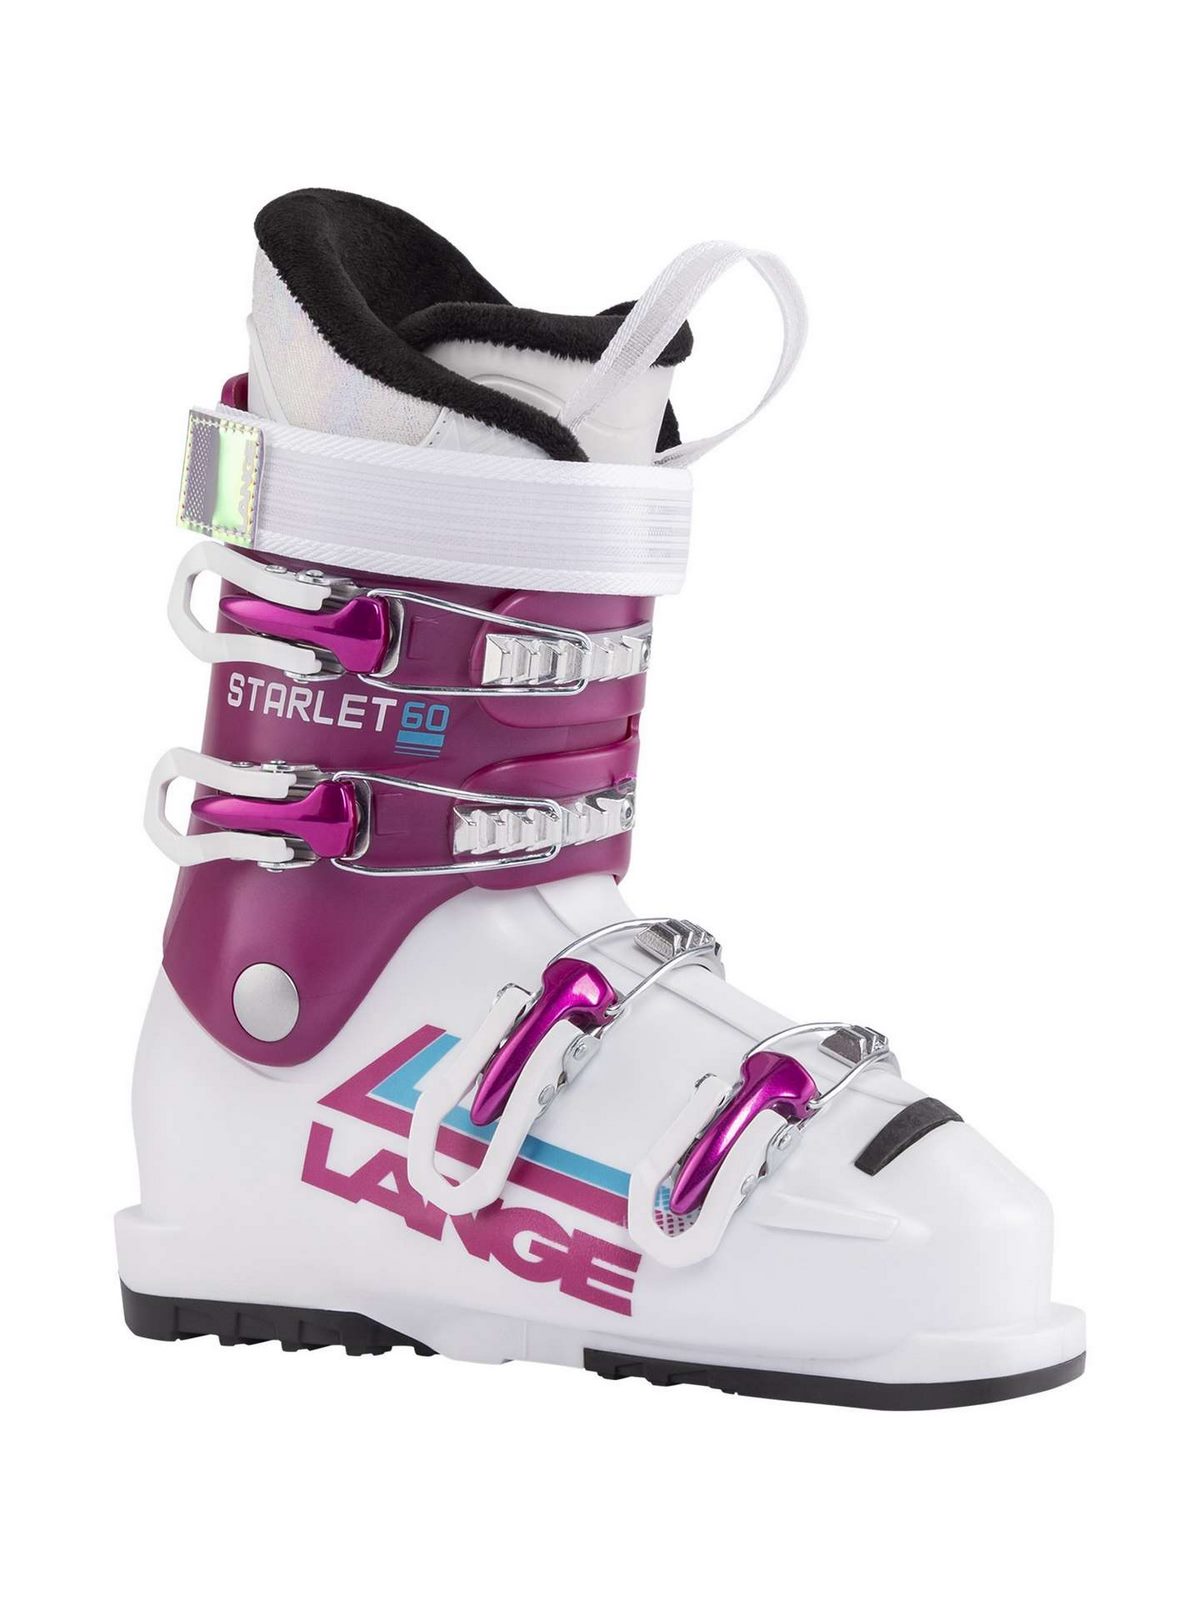 Buty narciarskie LANGE Starlet 50 - White/Star Pink